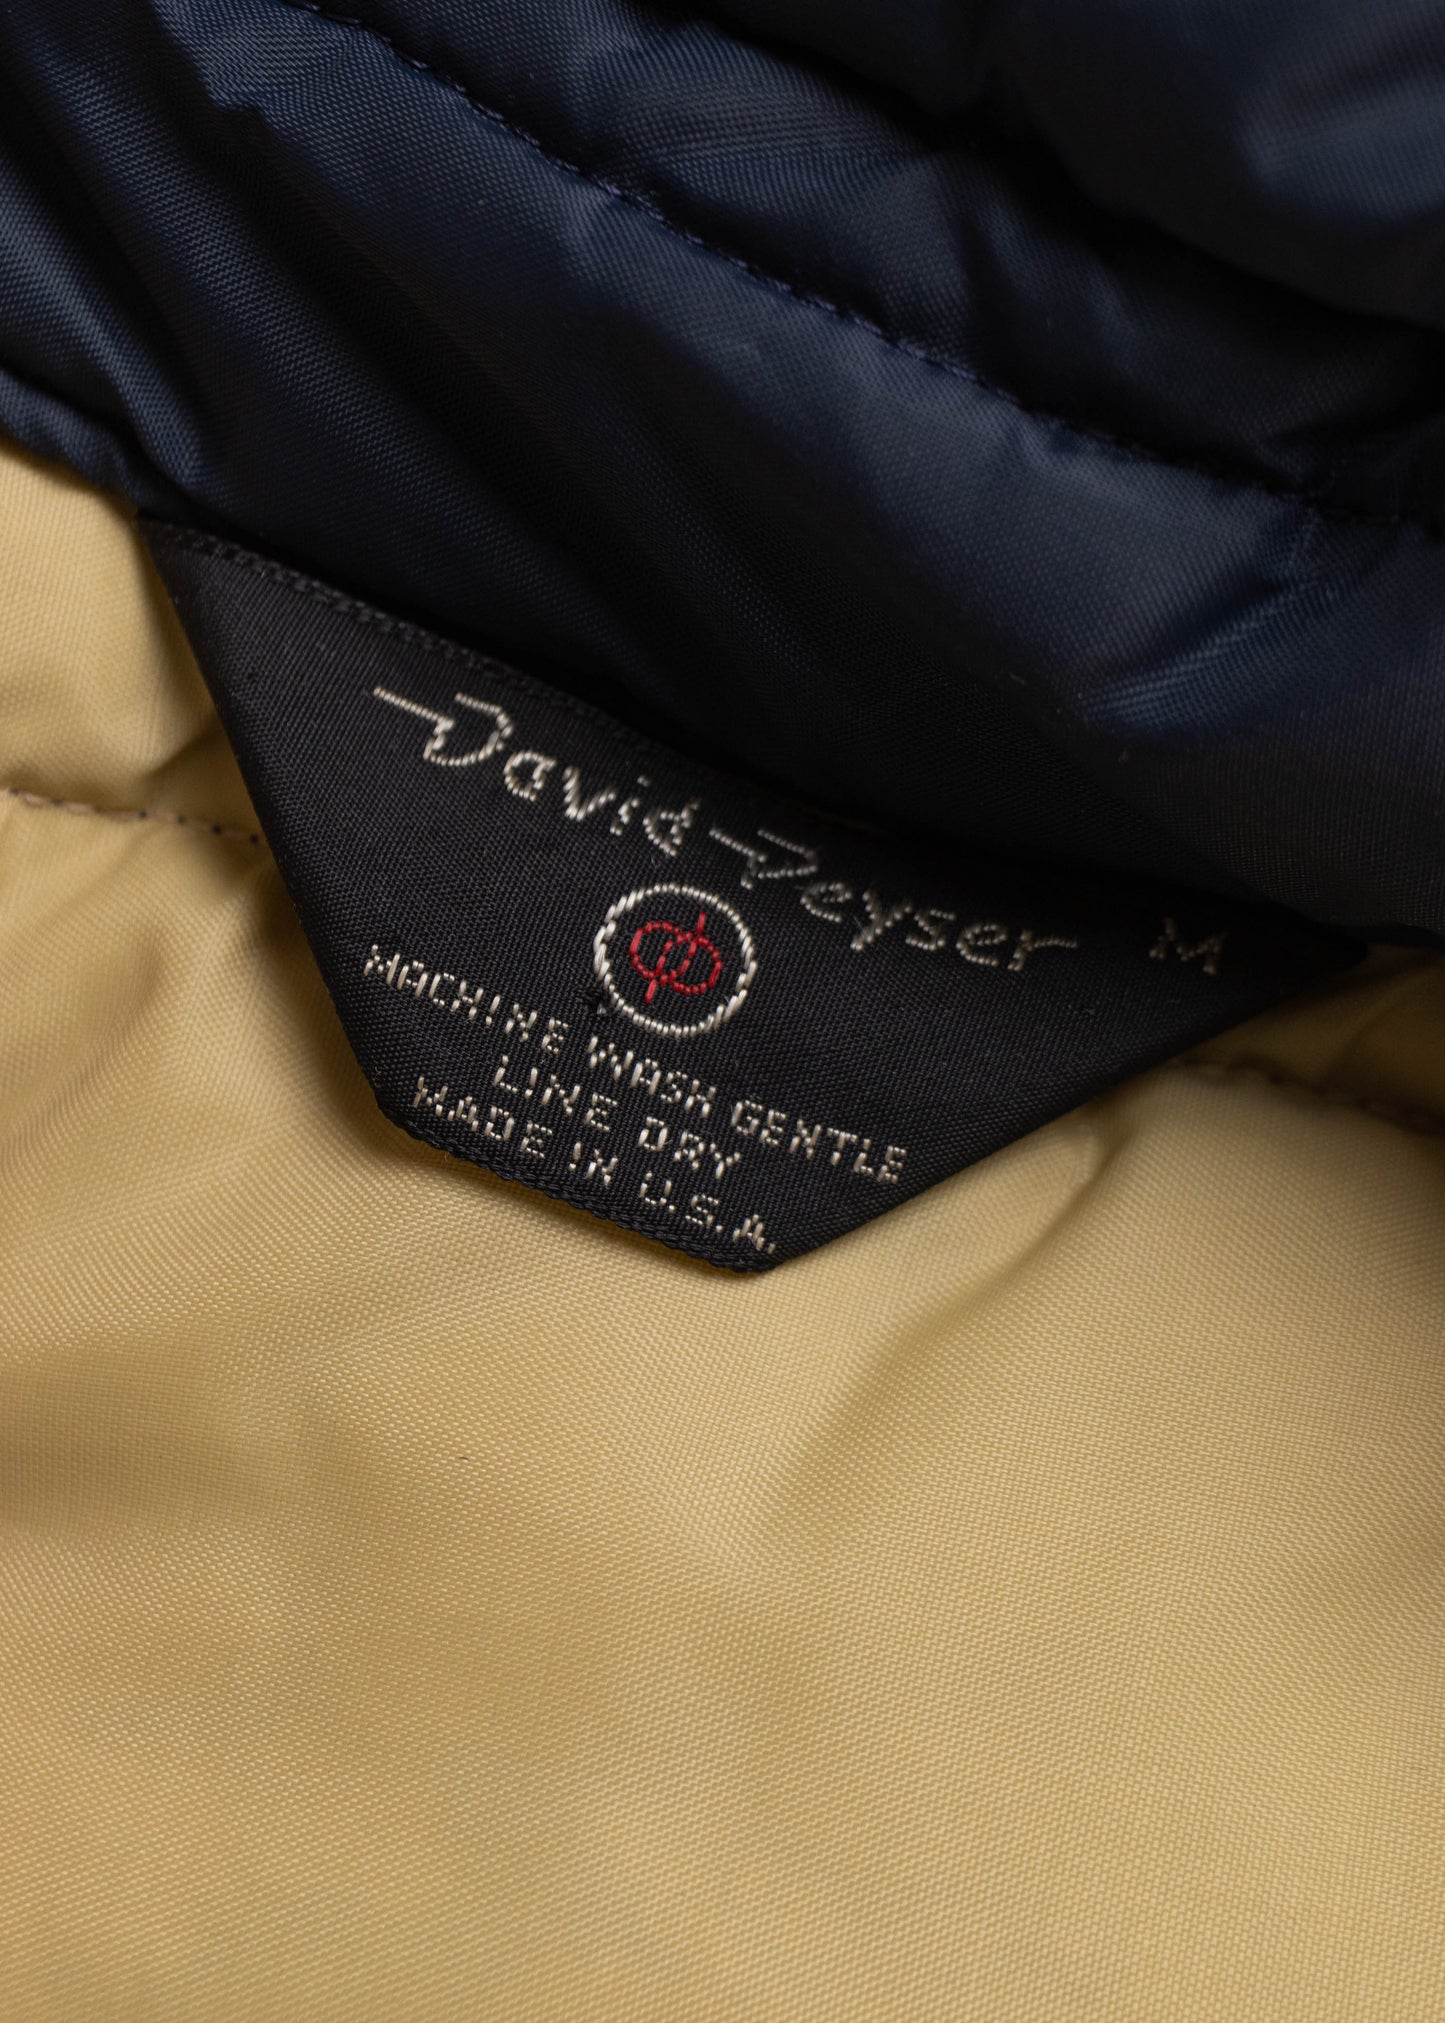 1970s David Peyser Nylon Vest Size M/L